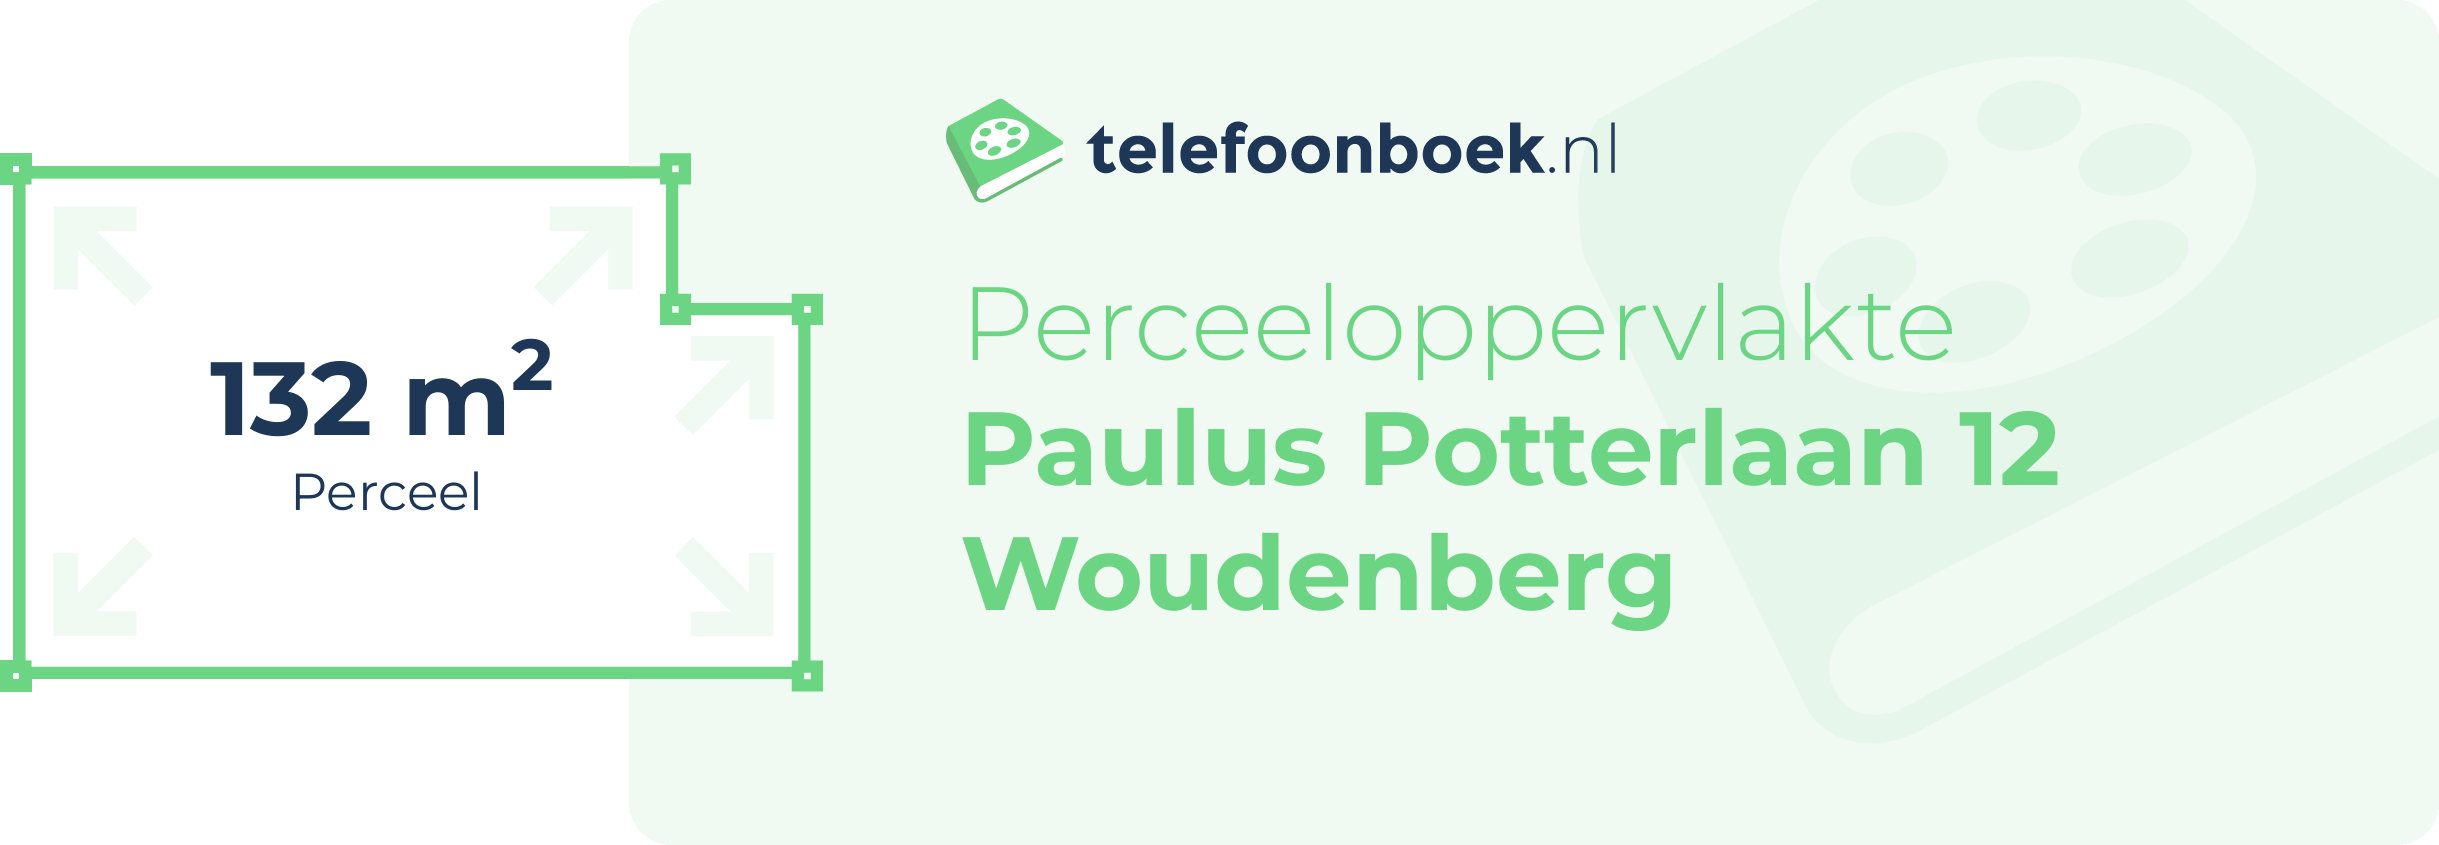 Perceeloppervlakte Paulus Potterlaan 12 Woudenberg